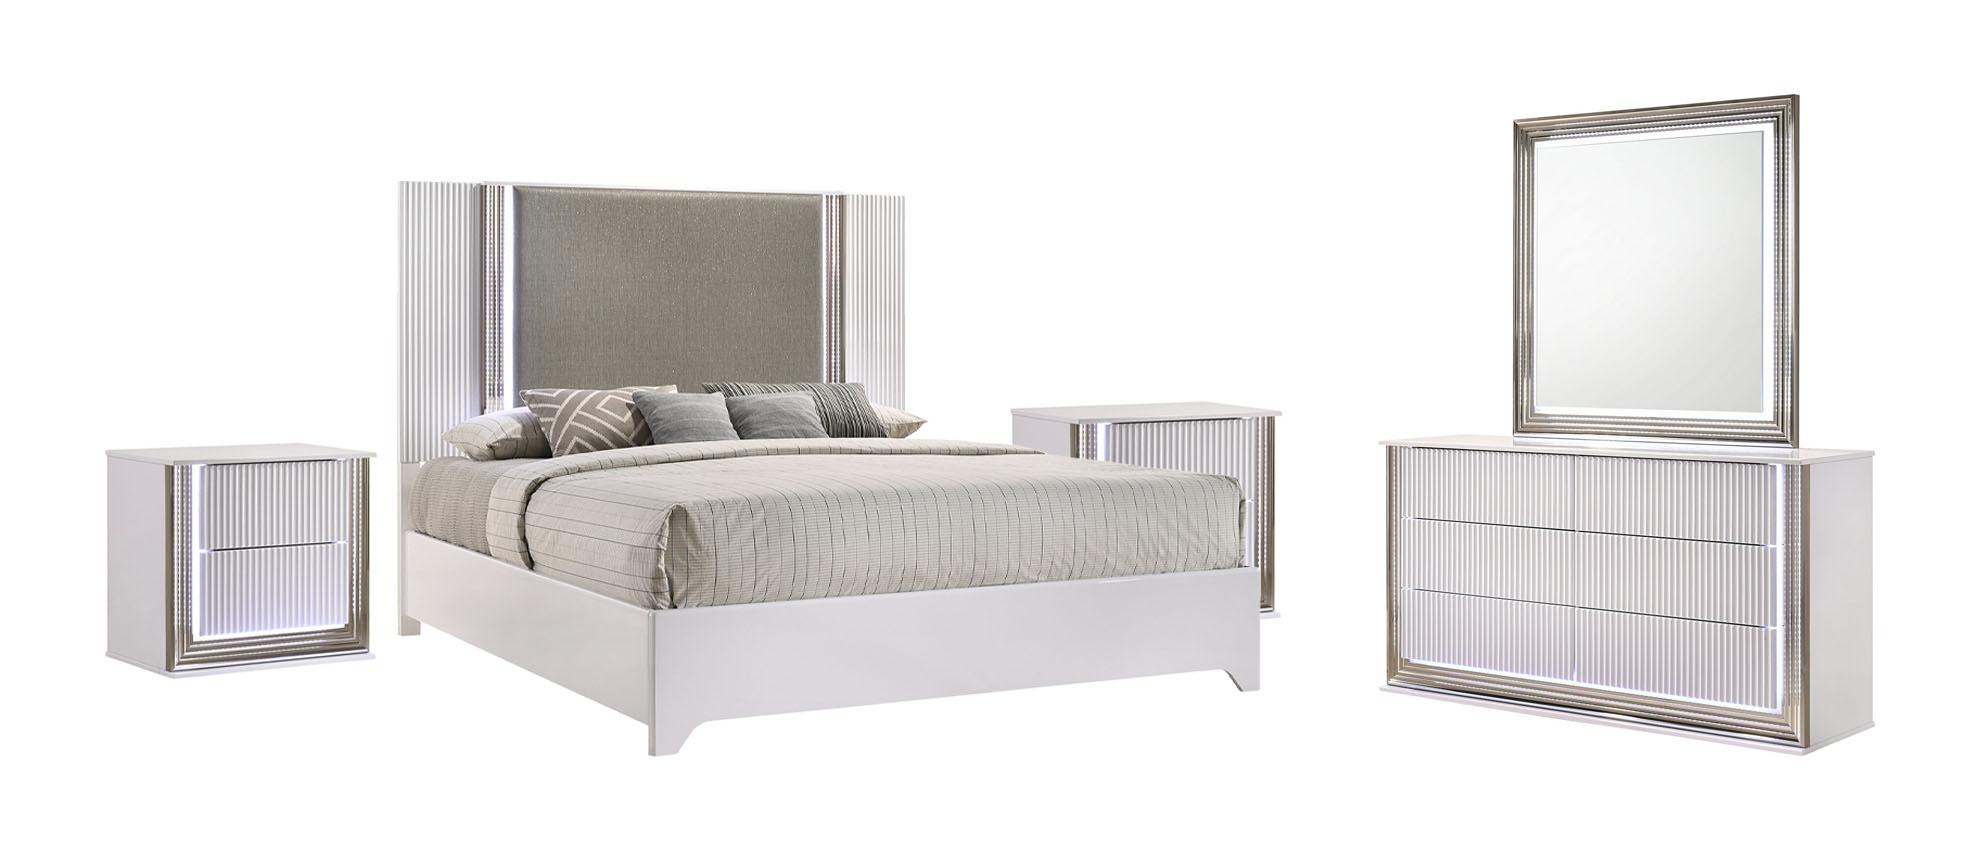 Modern Platform Bedroom Set ASPEN ASPEN-WH-QB-Set-5 in White Faux Leather